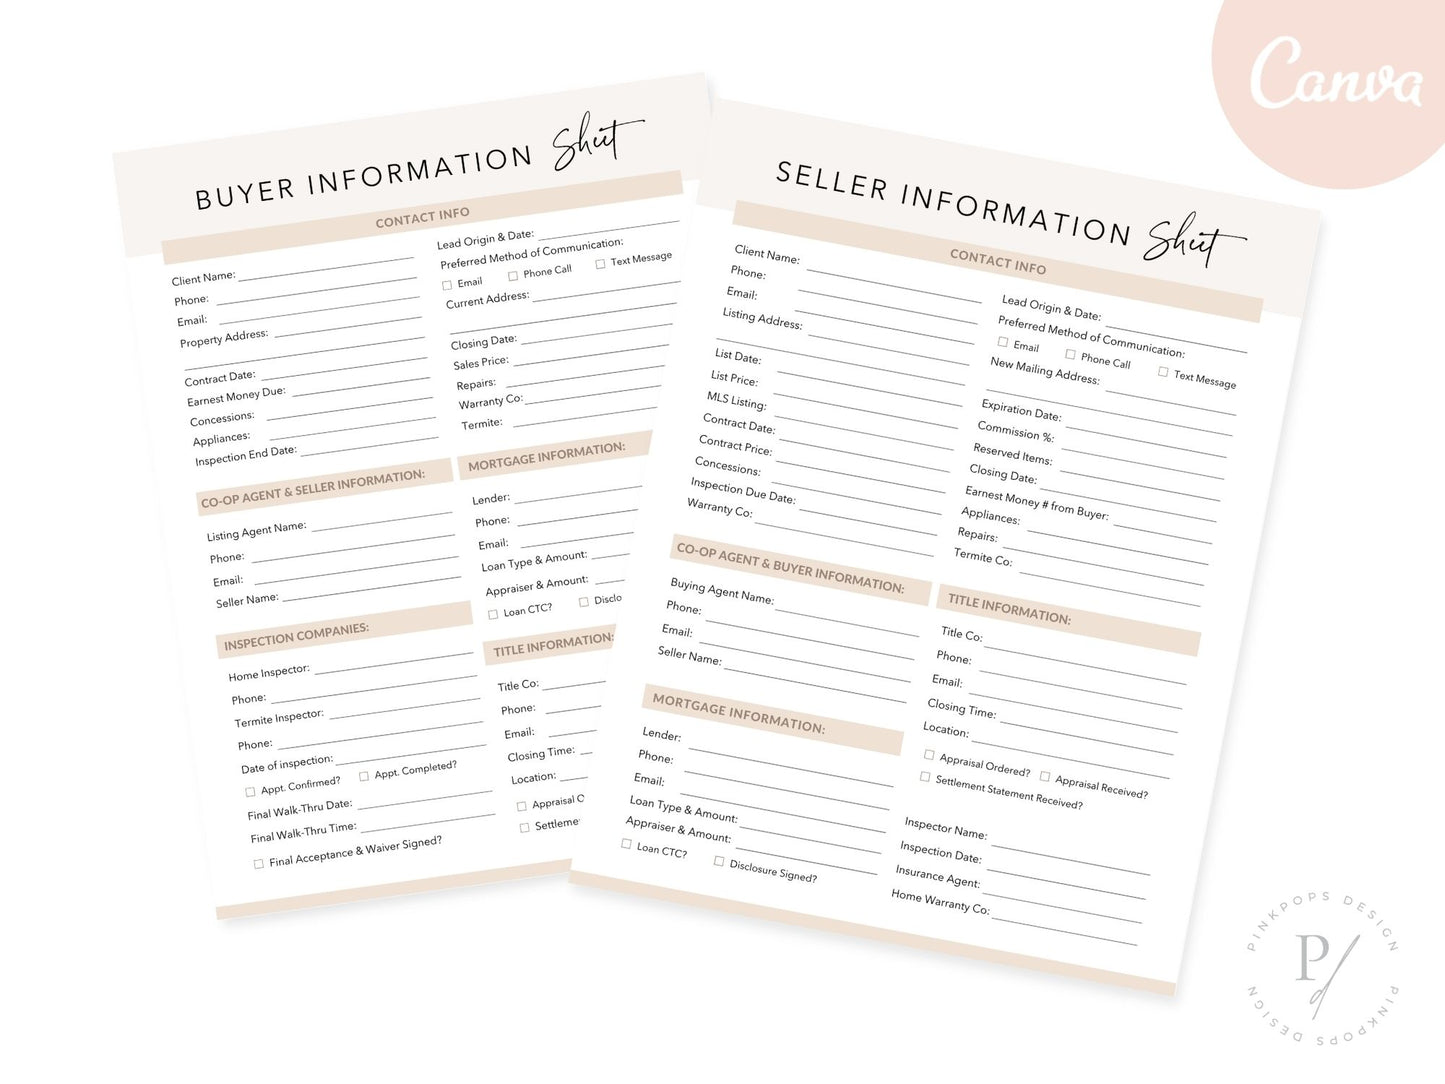 Buyer & Seller Information Sheet